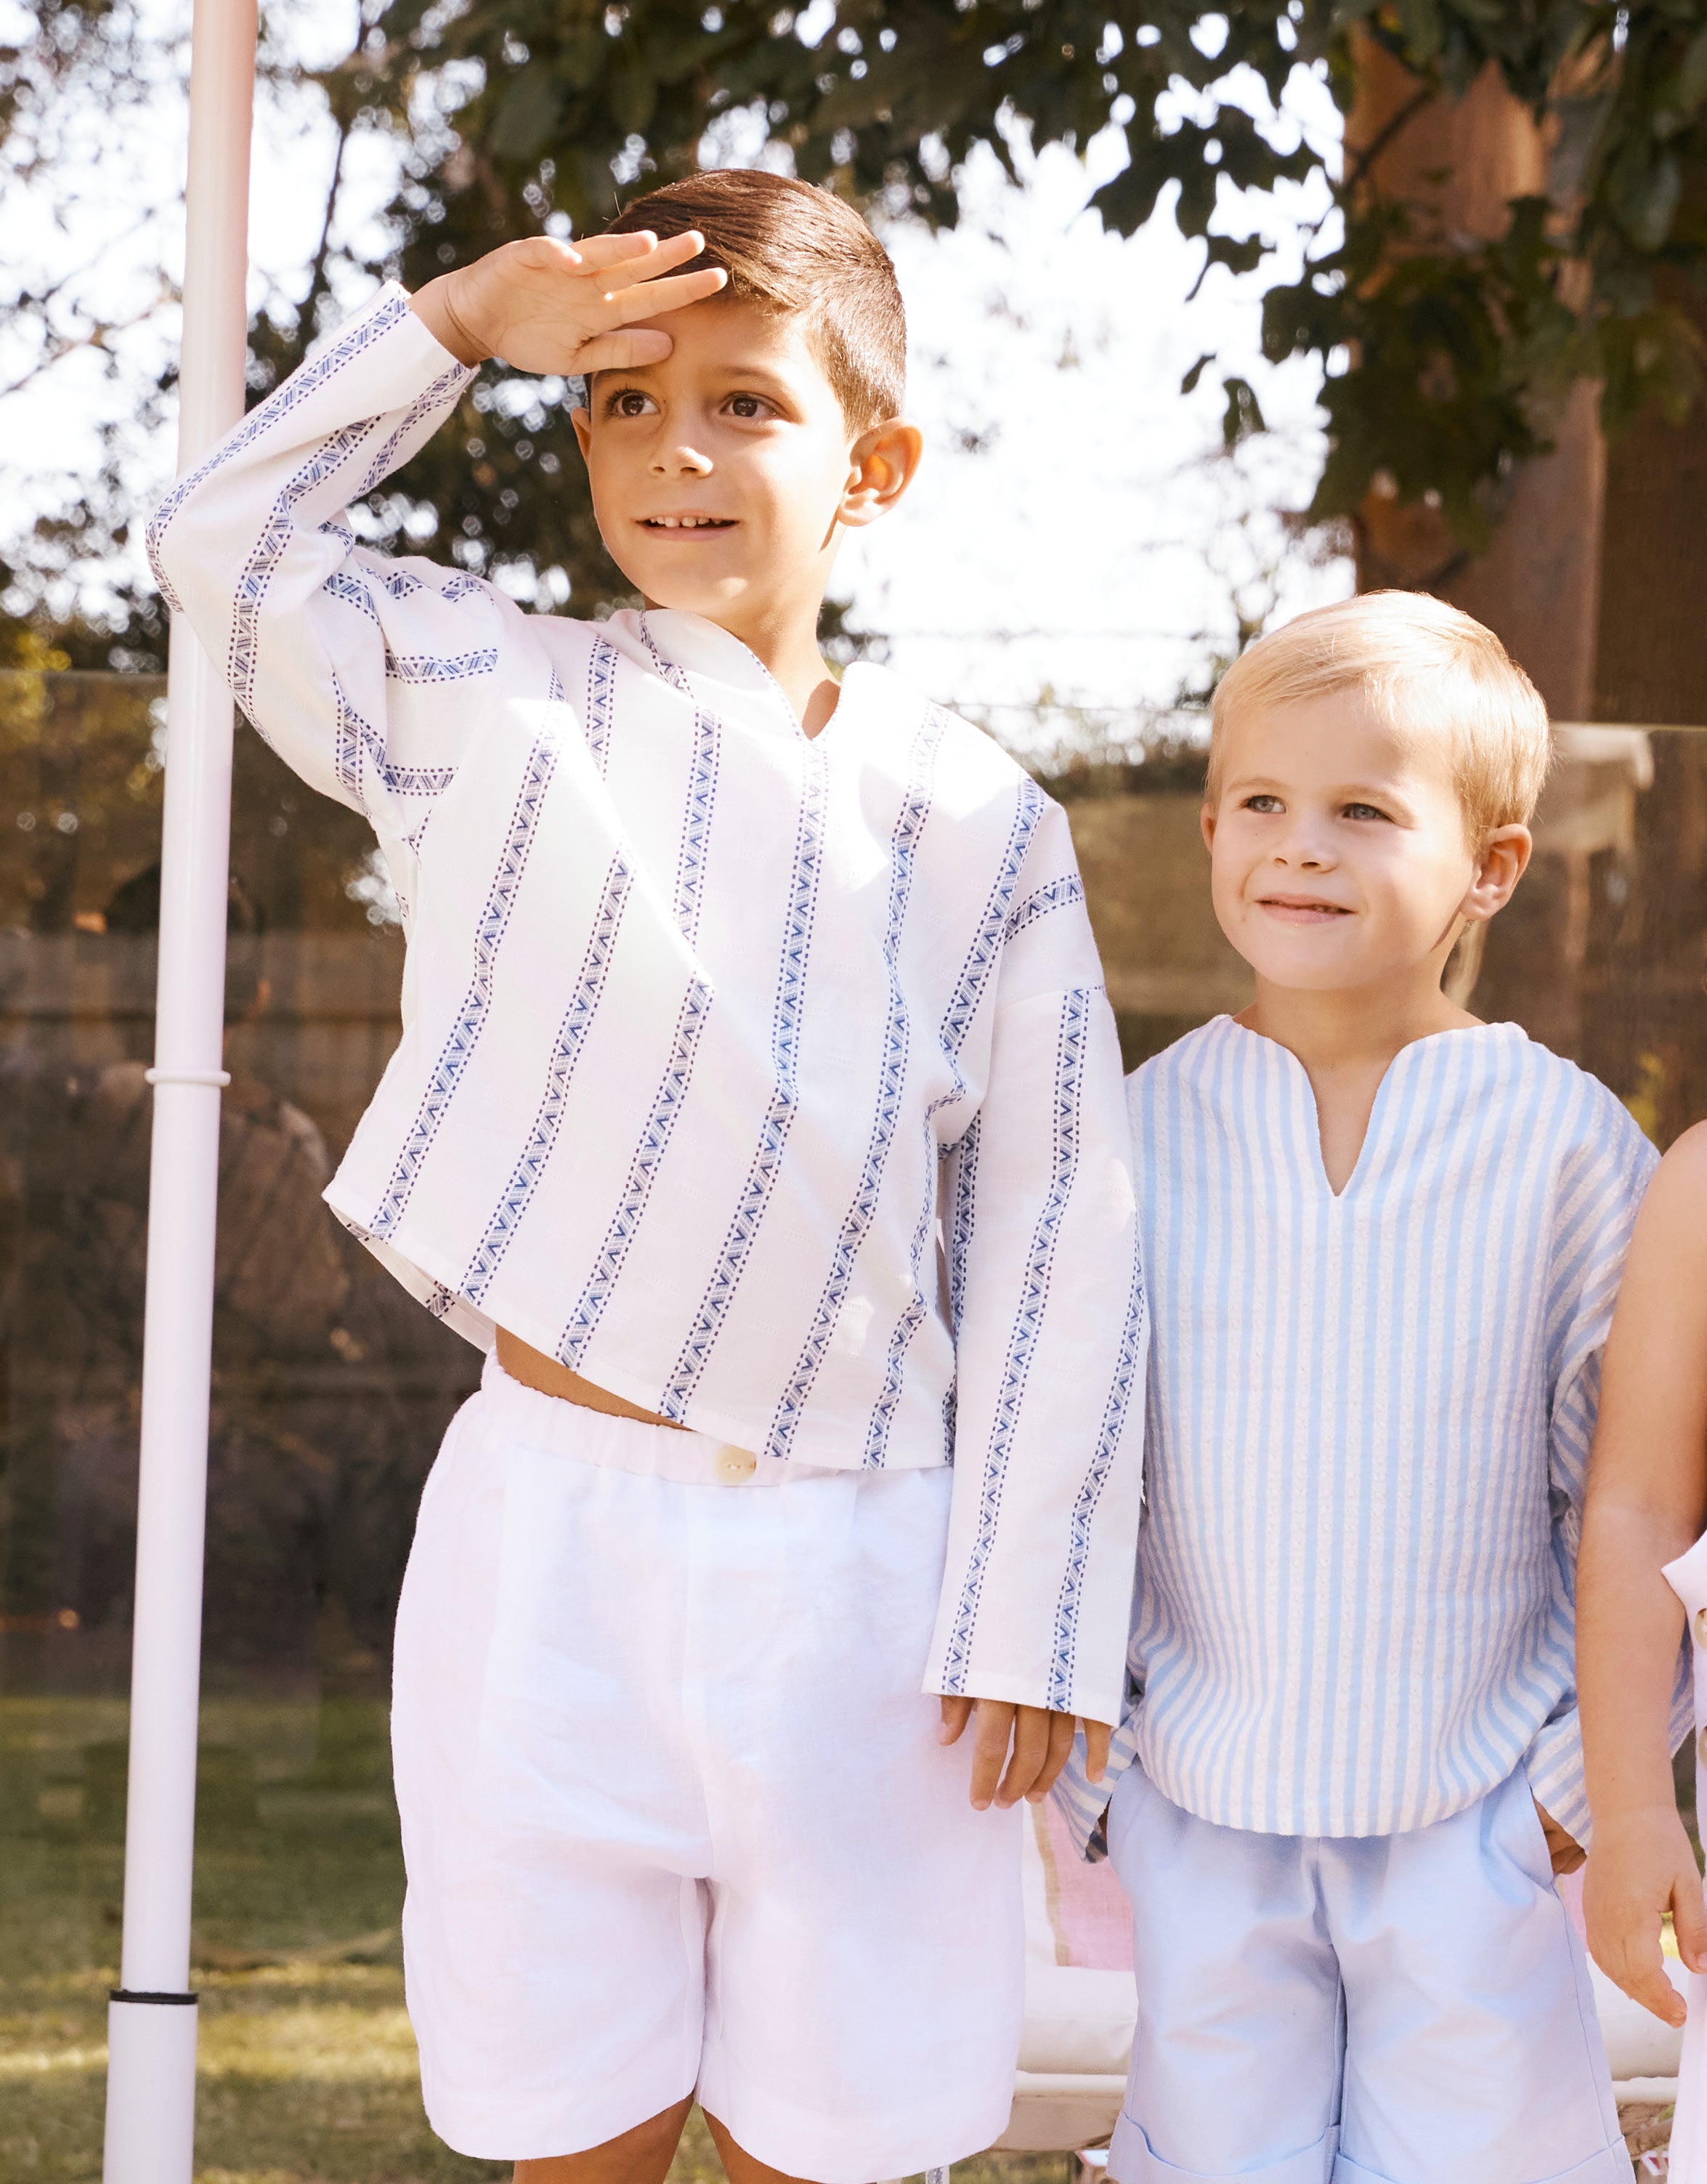 Boys' Designer Shirts, navy stripe, ages 1 to 6.